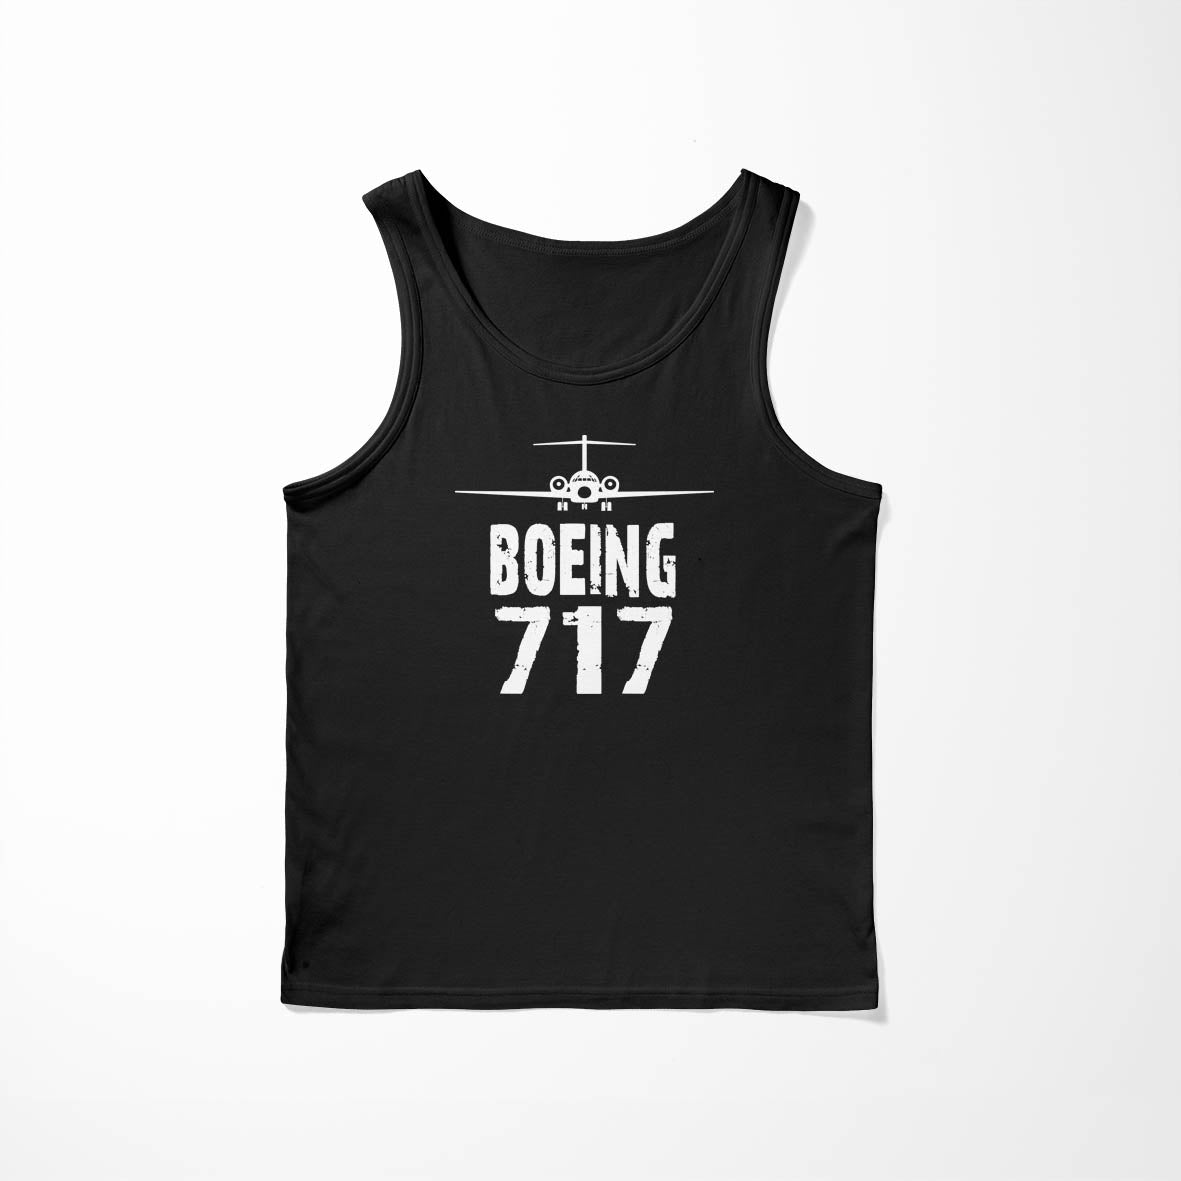 Boeing 717 & Plane Designed Tank Tops